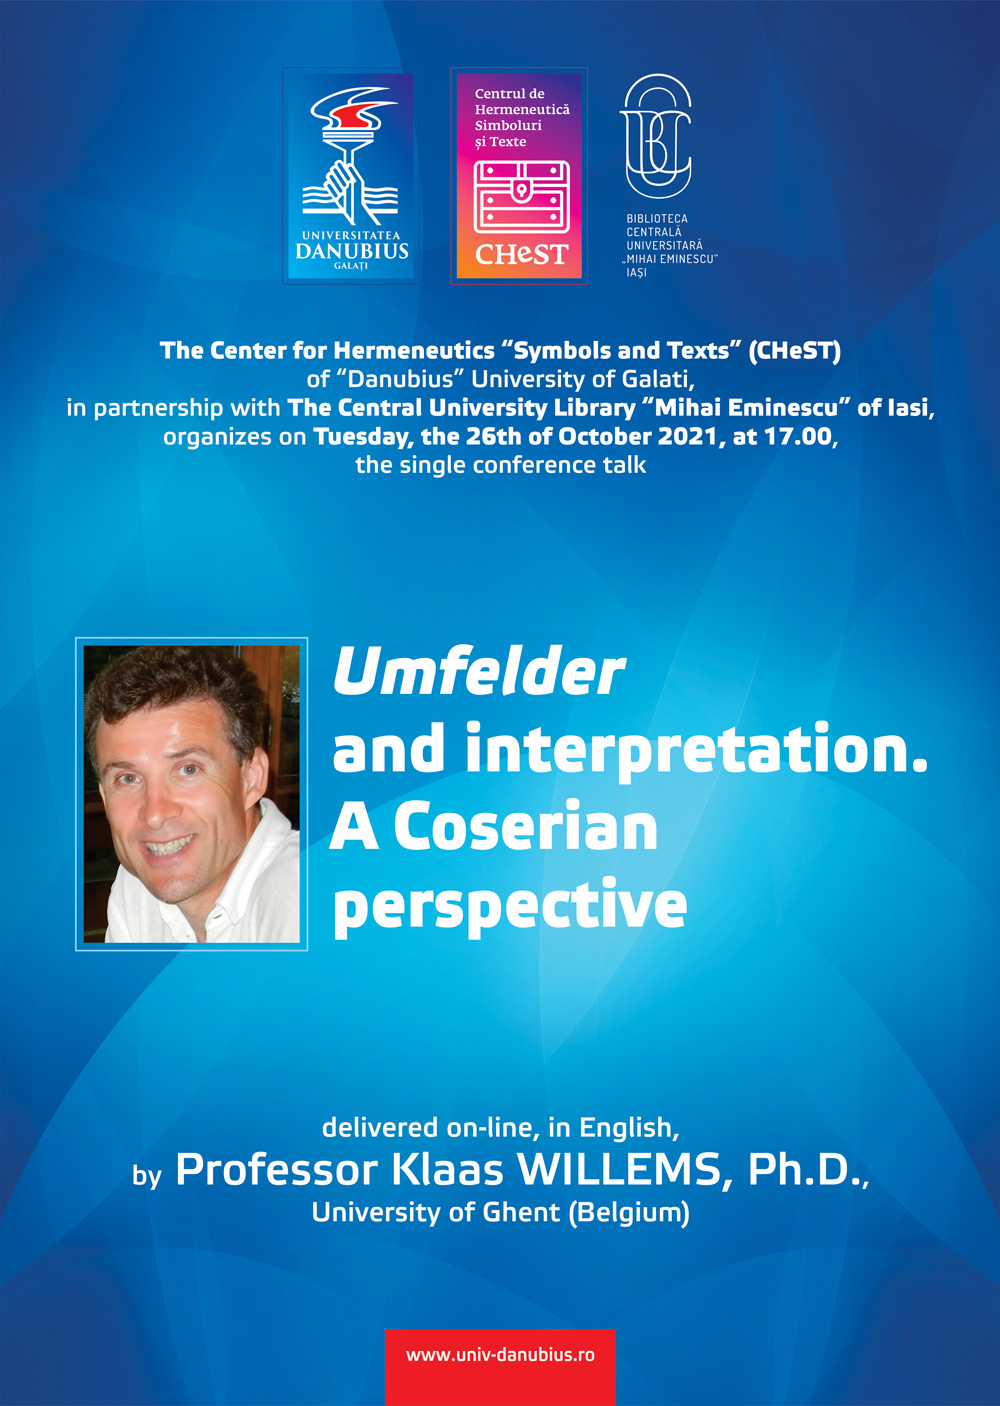 The single conference talk Umfelder and interpretation. A Coserian perspective